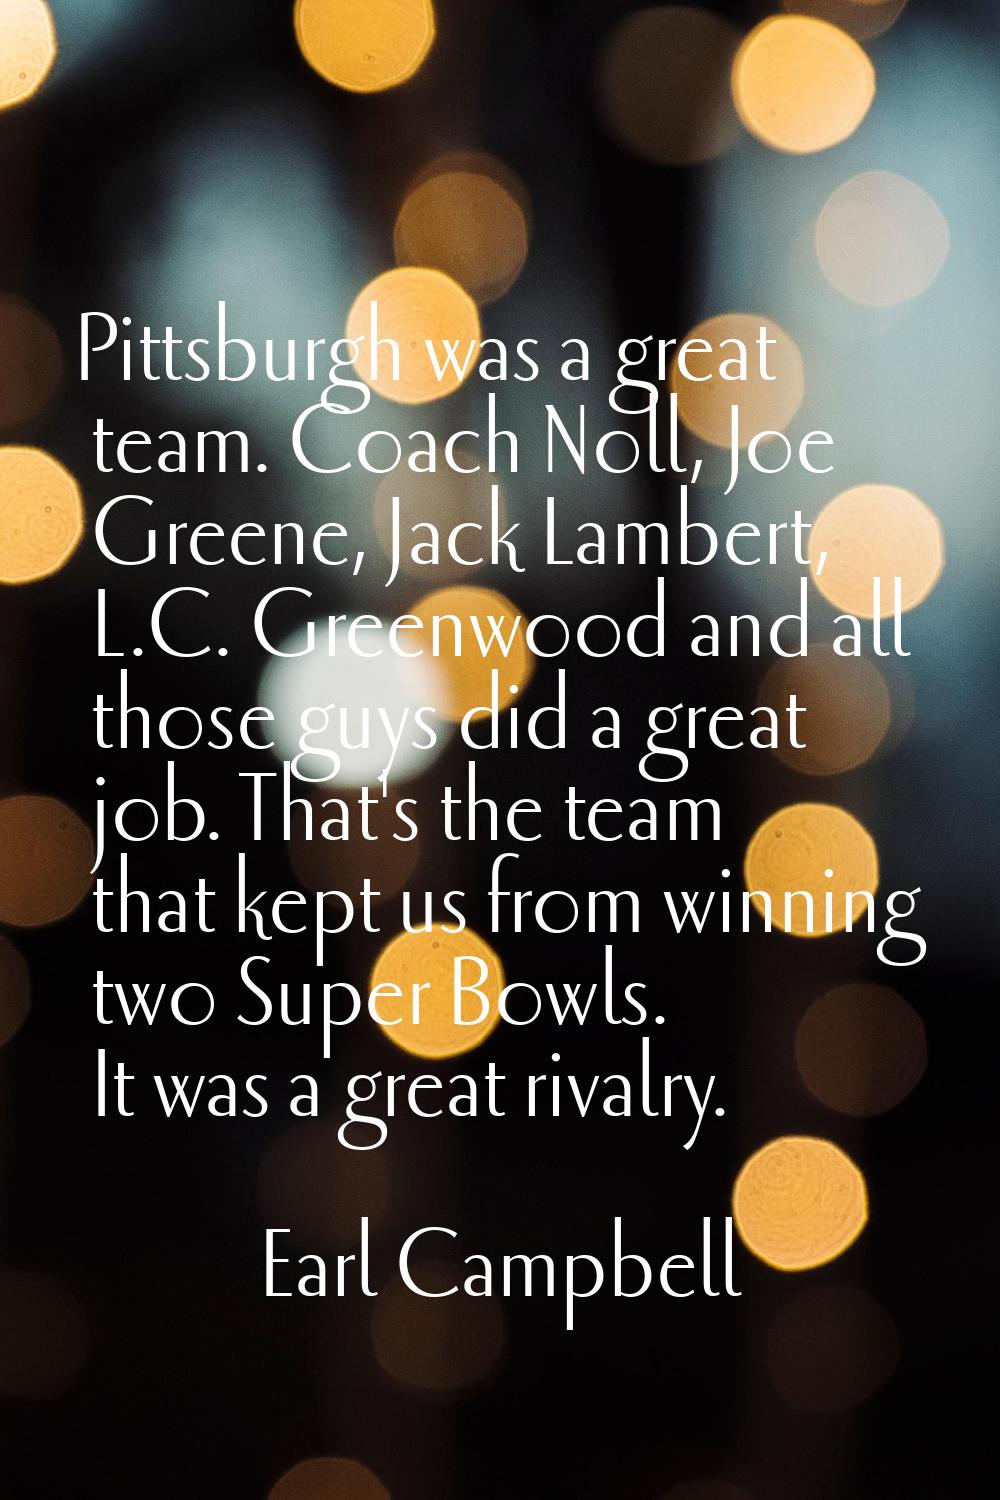 Pittsburgh was a great team. Coach Noll, Joe Greene, Jack Lambert, L.C. Greenwood and all those guy